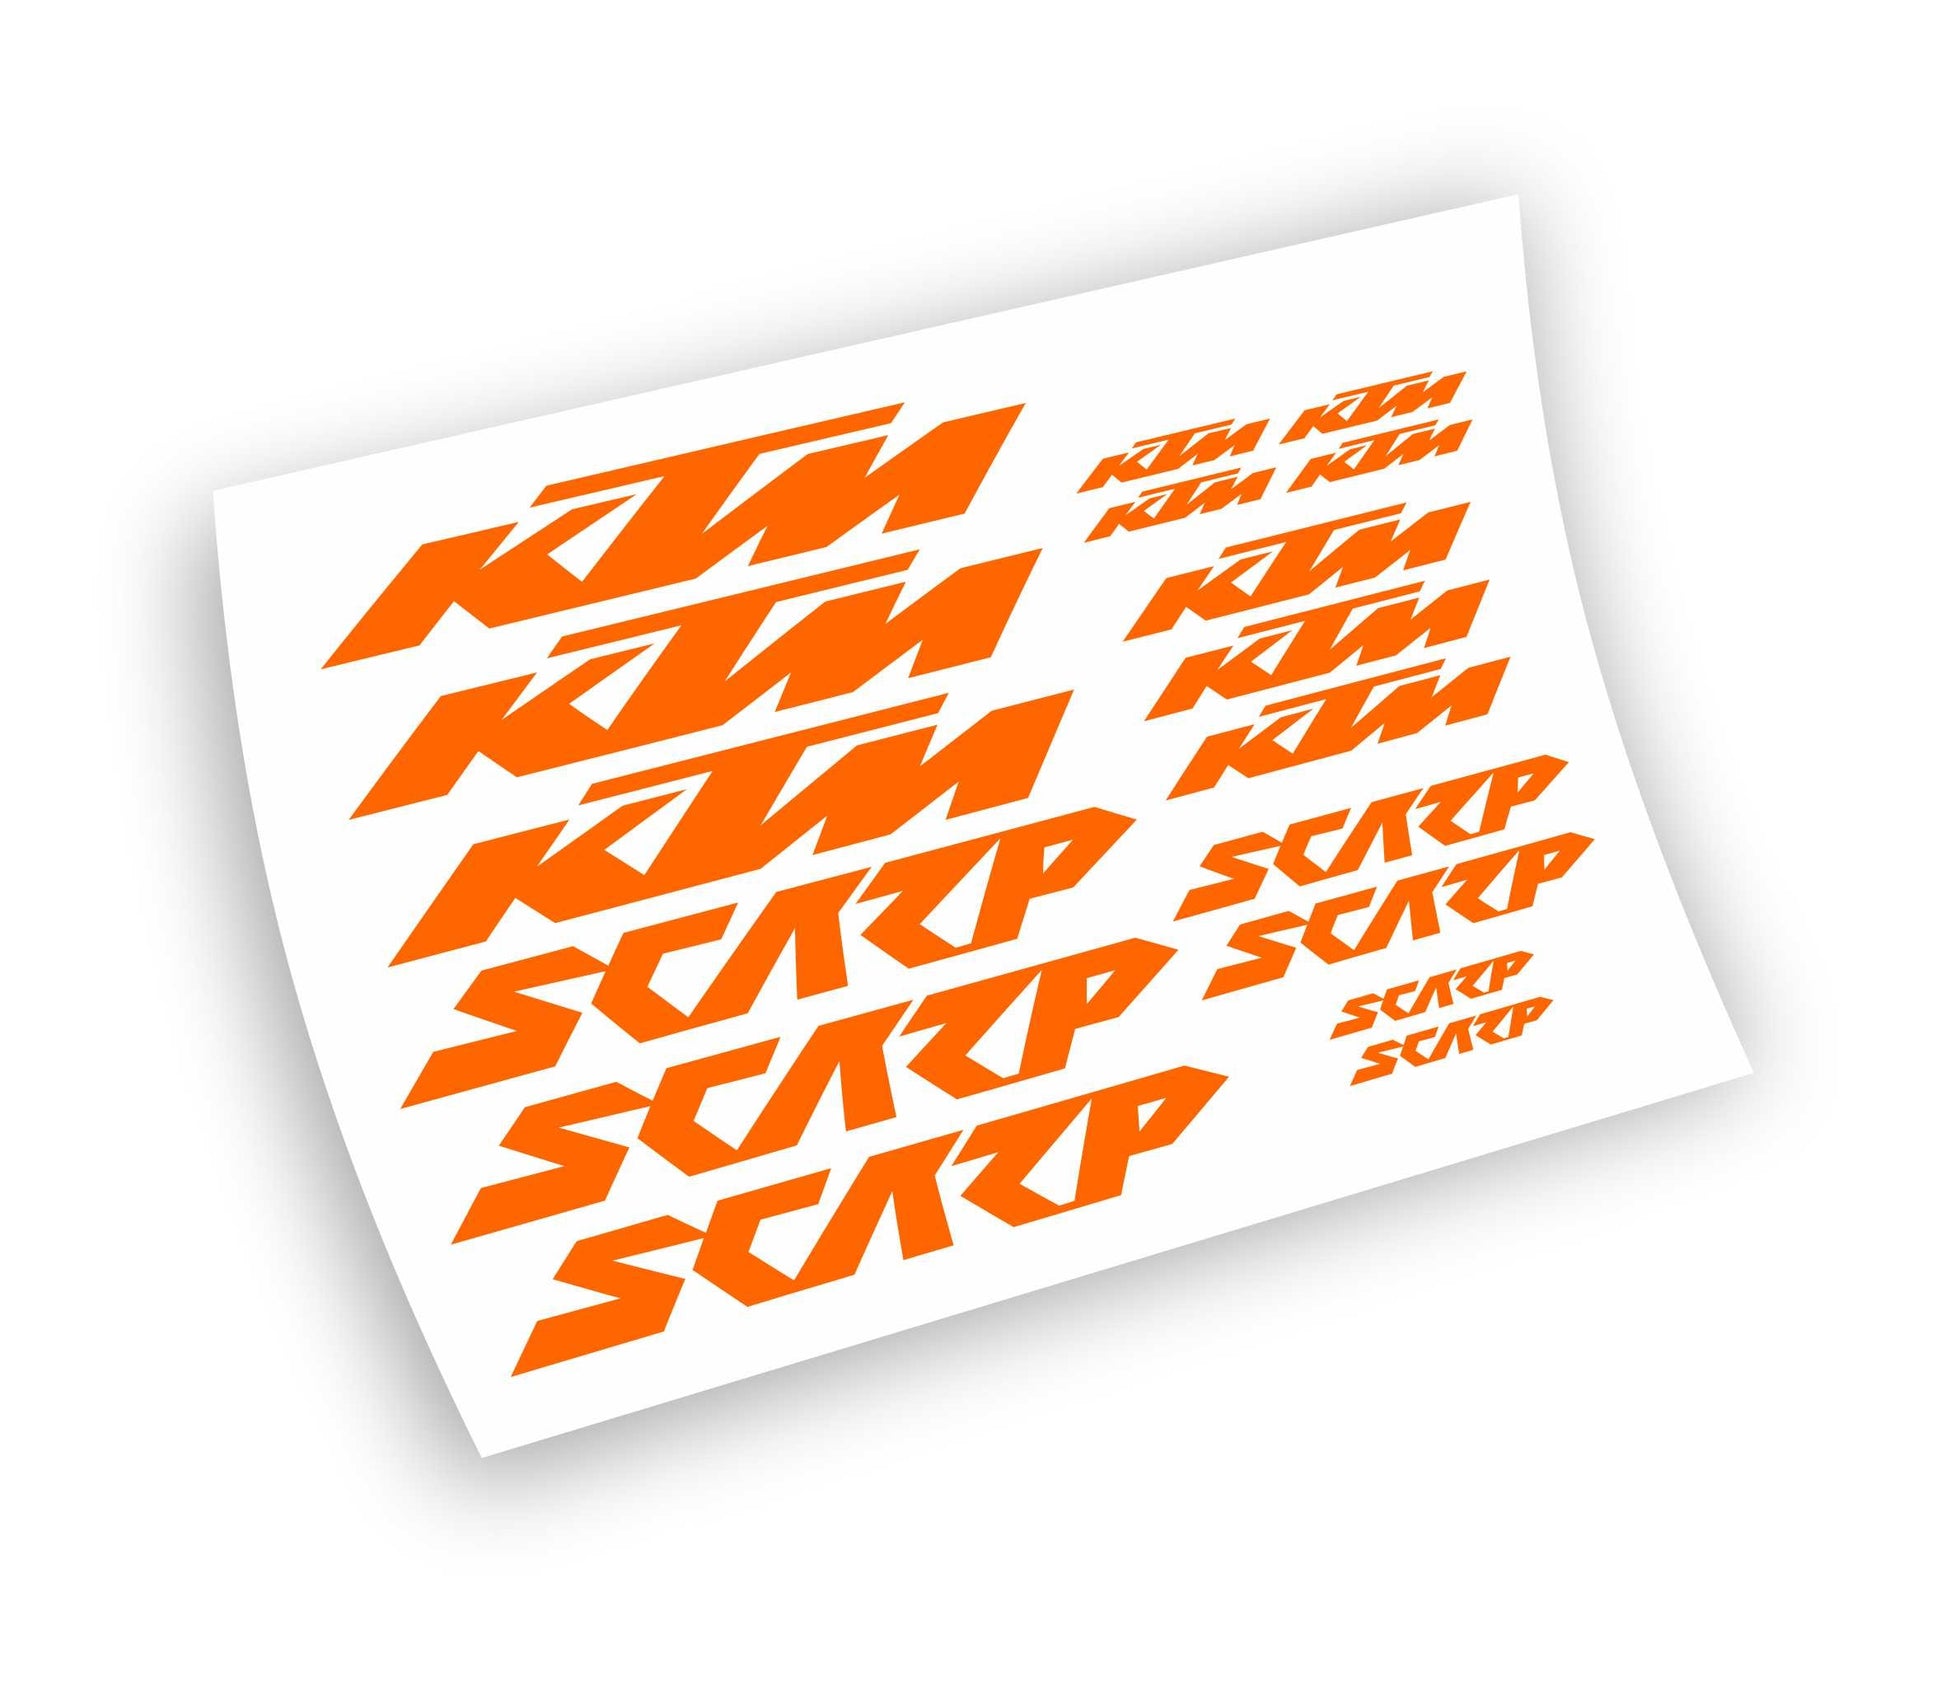 KTM Scarp kit adesivi completo per mountain bike biciletta mtb 17